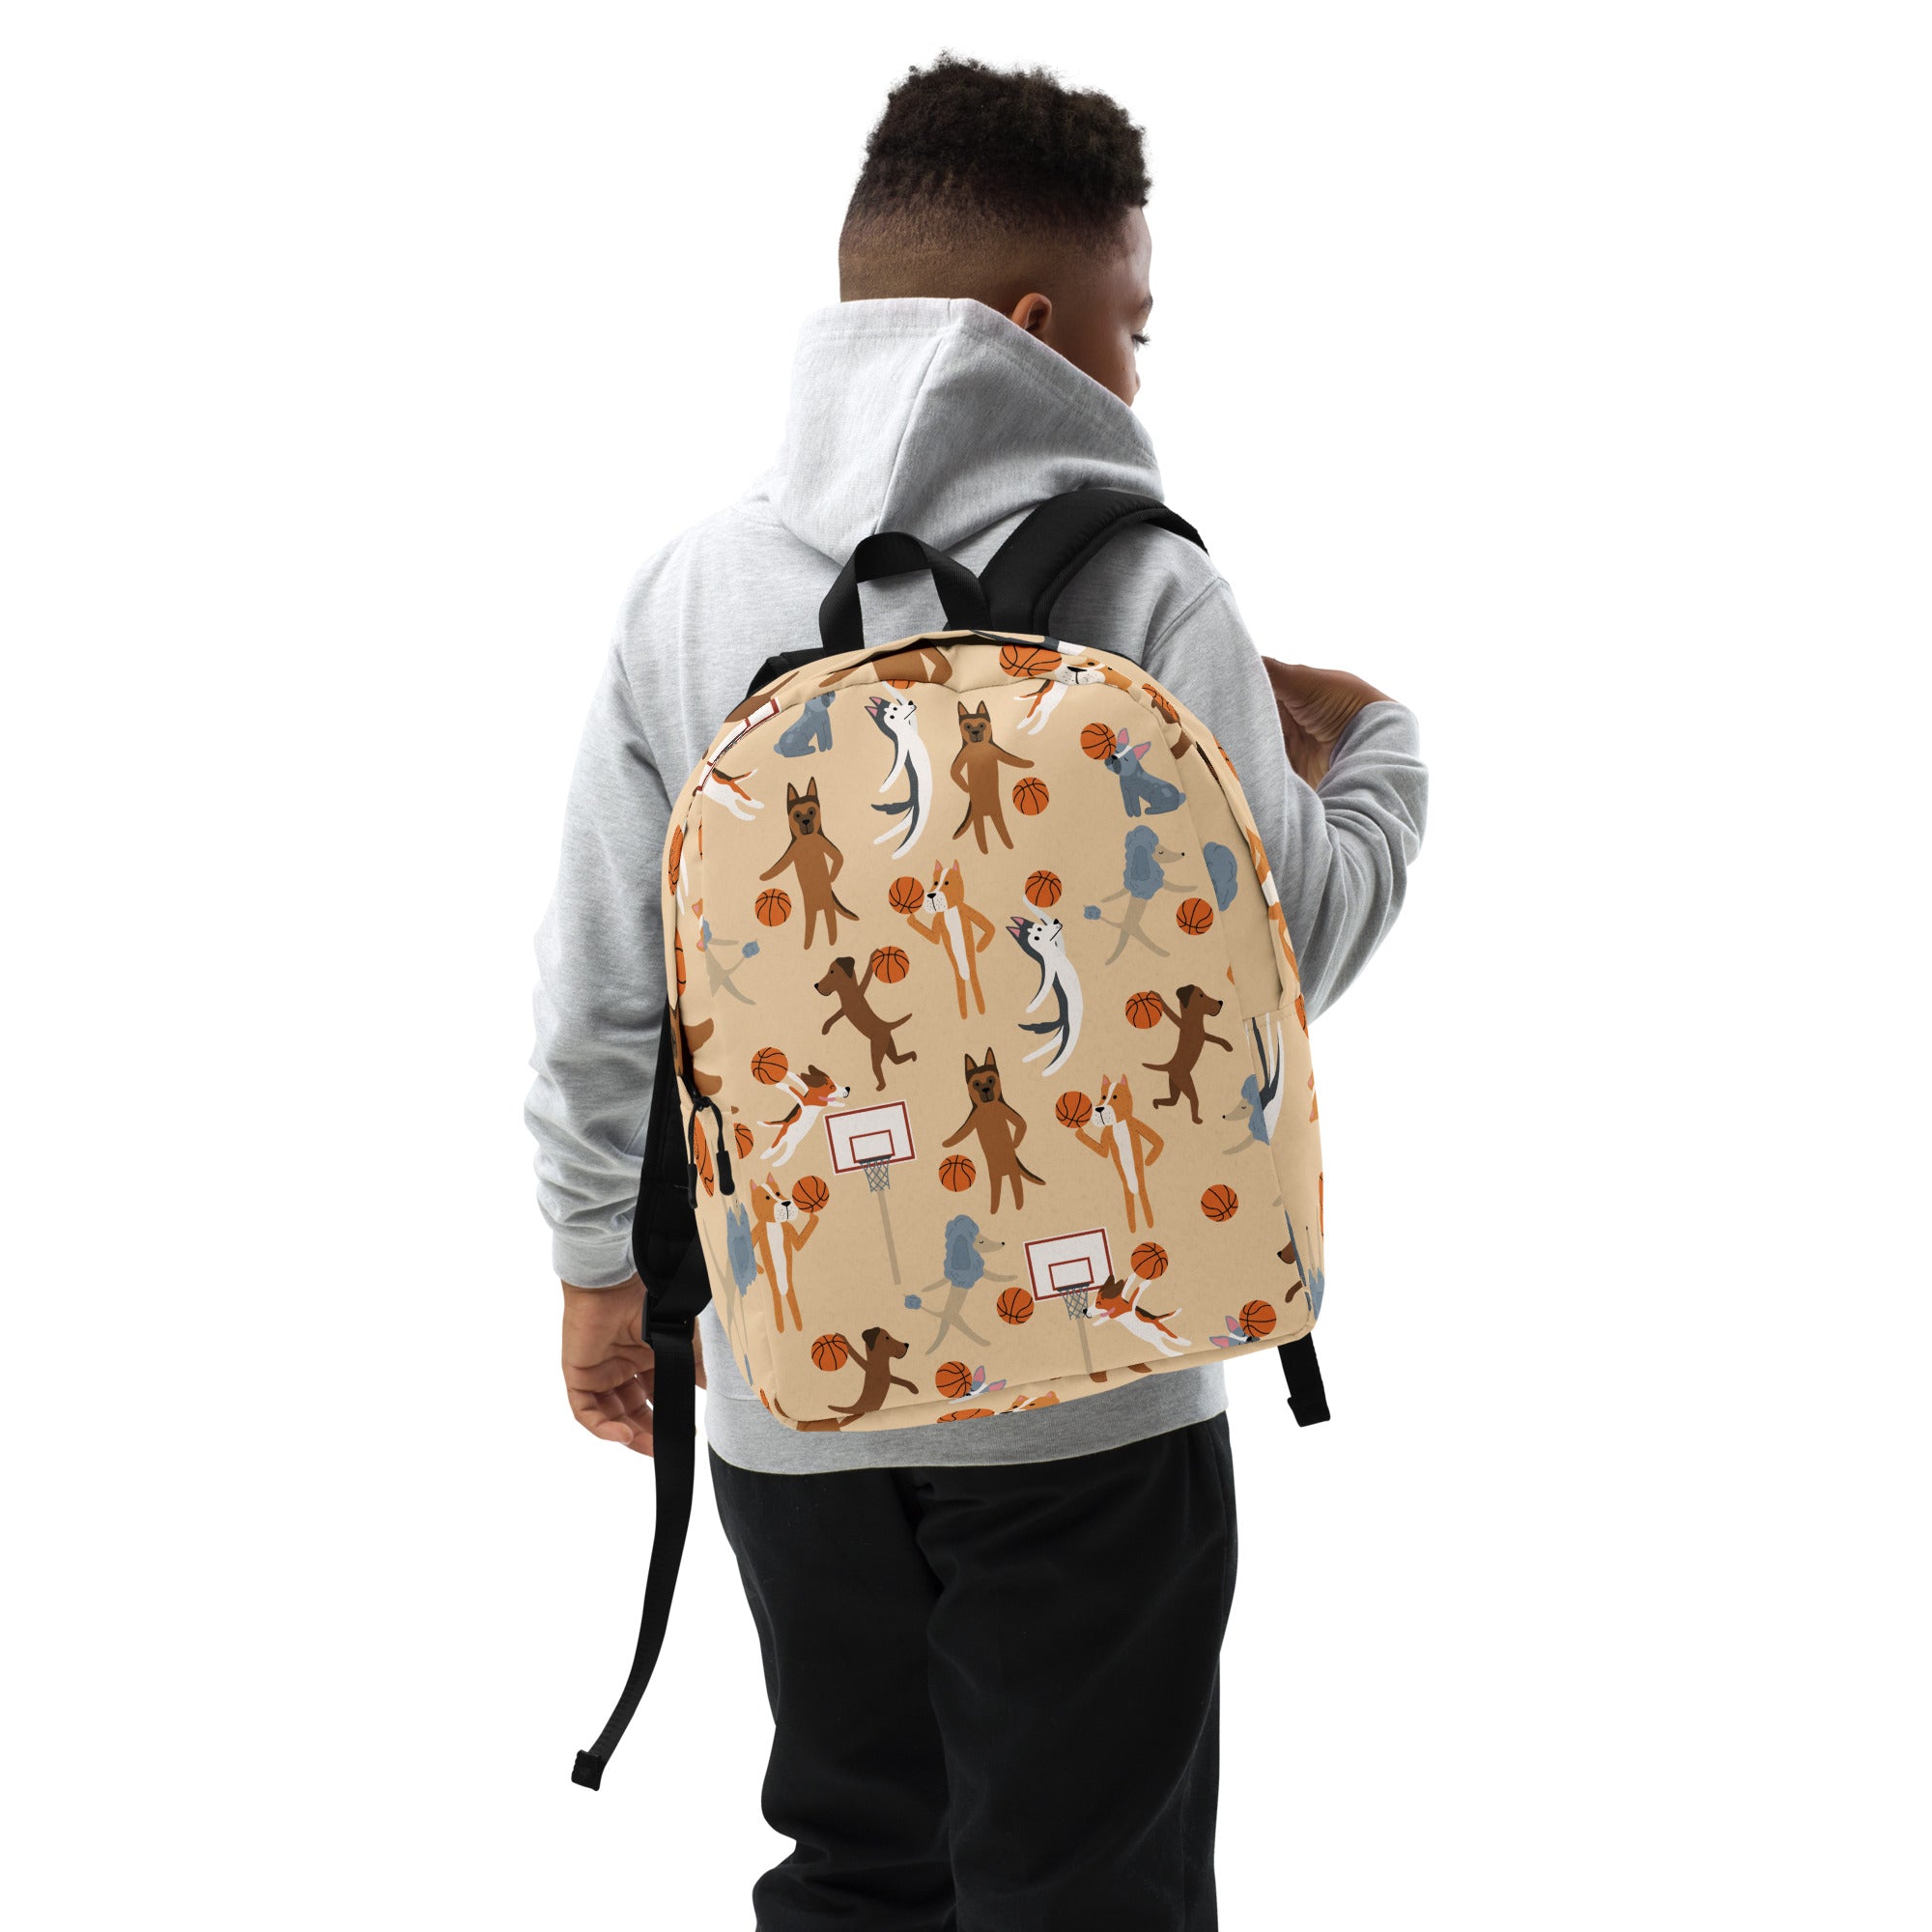 Pawsitive Pals Basketball Backpack (minimalist style)